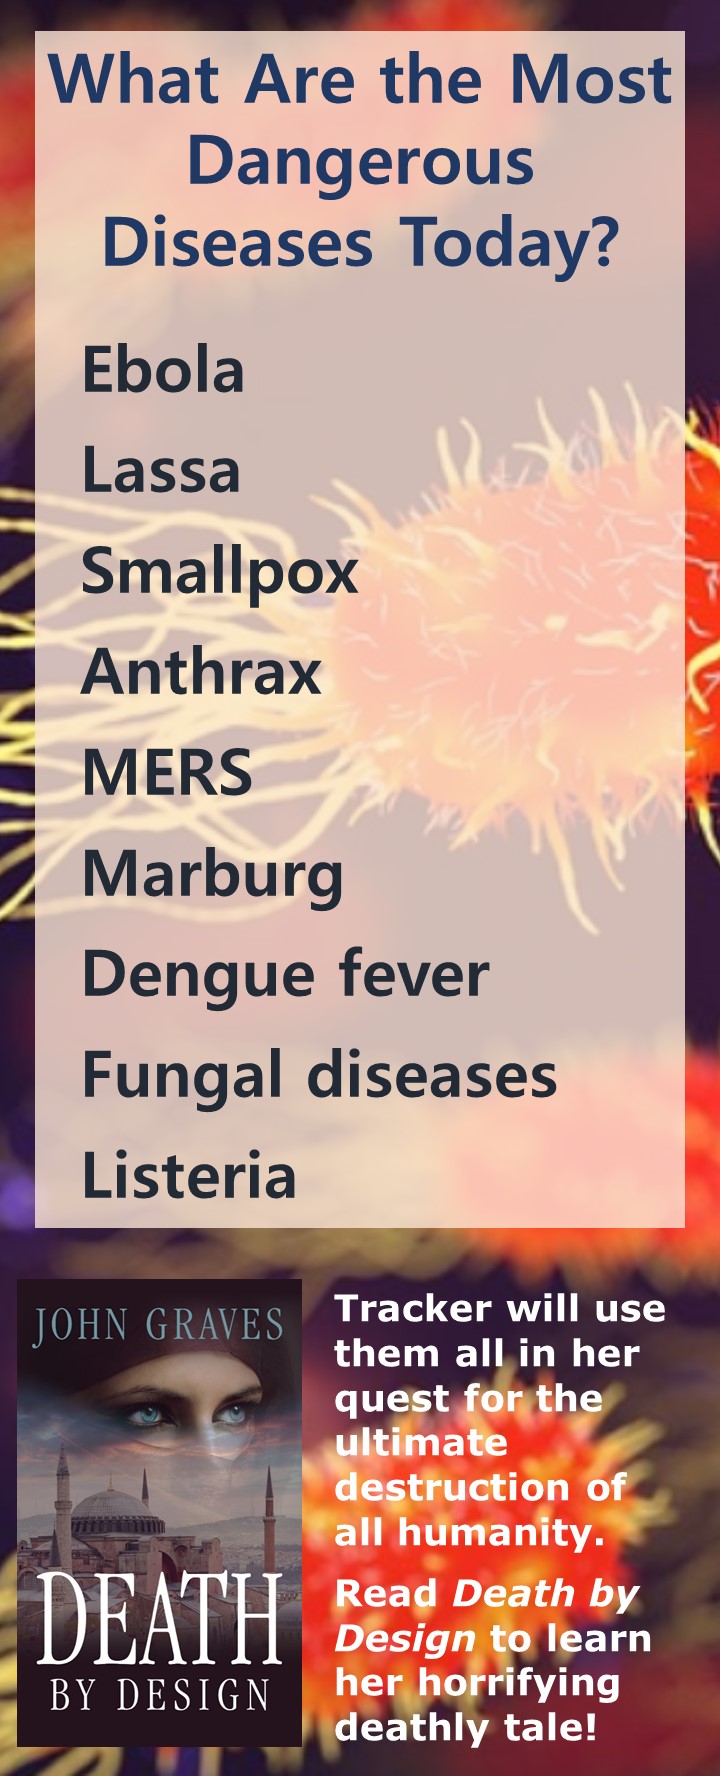 Dangerous Diseases tip-o-graphic via The Tracker Series by John Graves